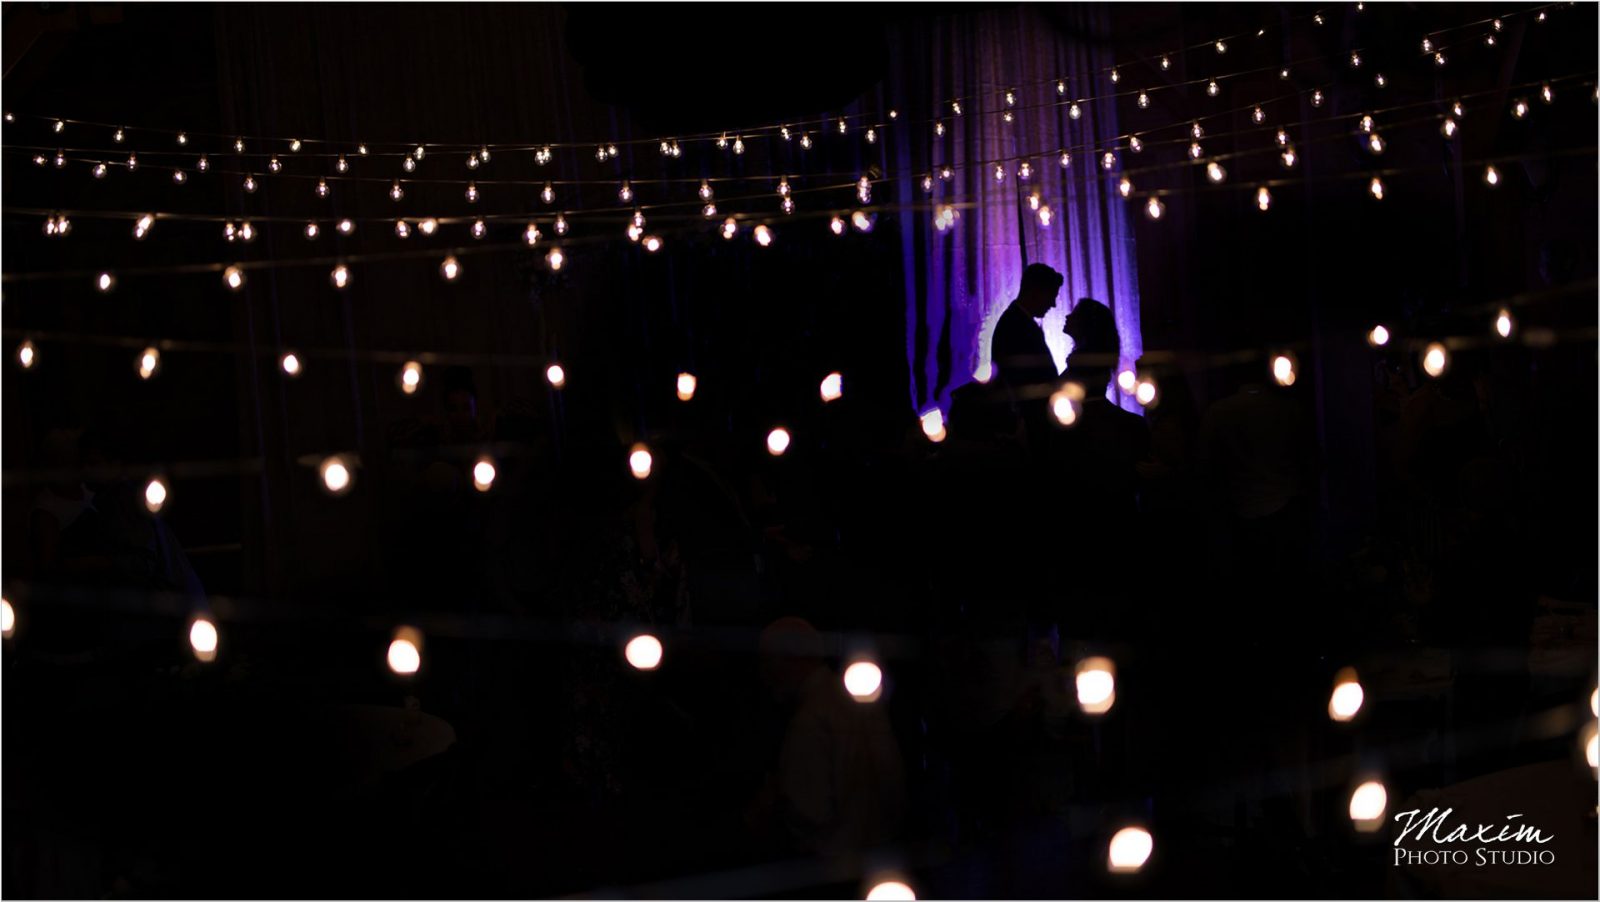 Canopy Creek Dayton Oh wedding Reception bistro lights